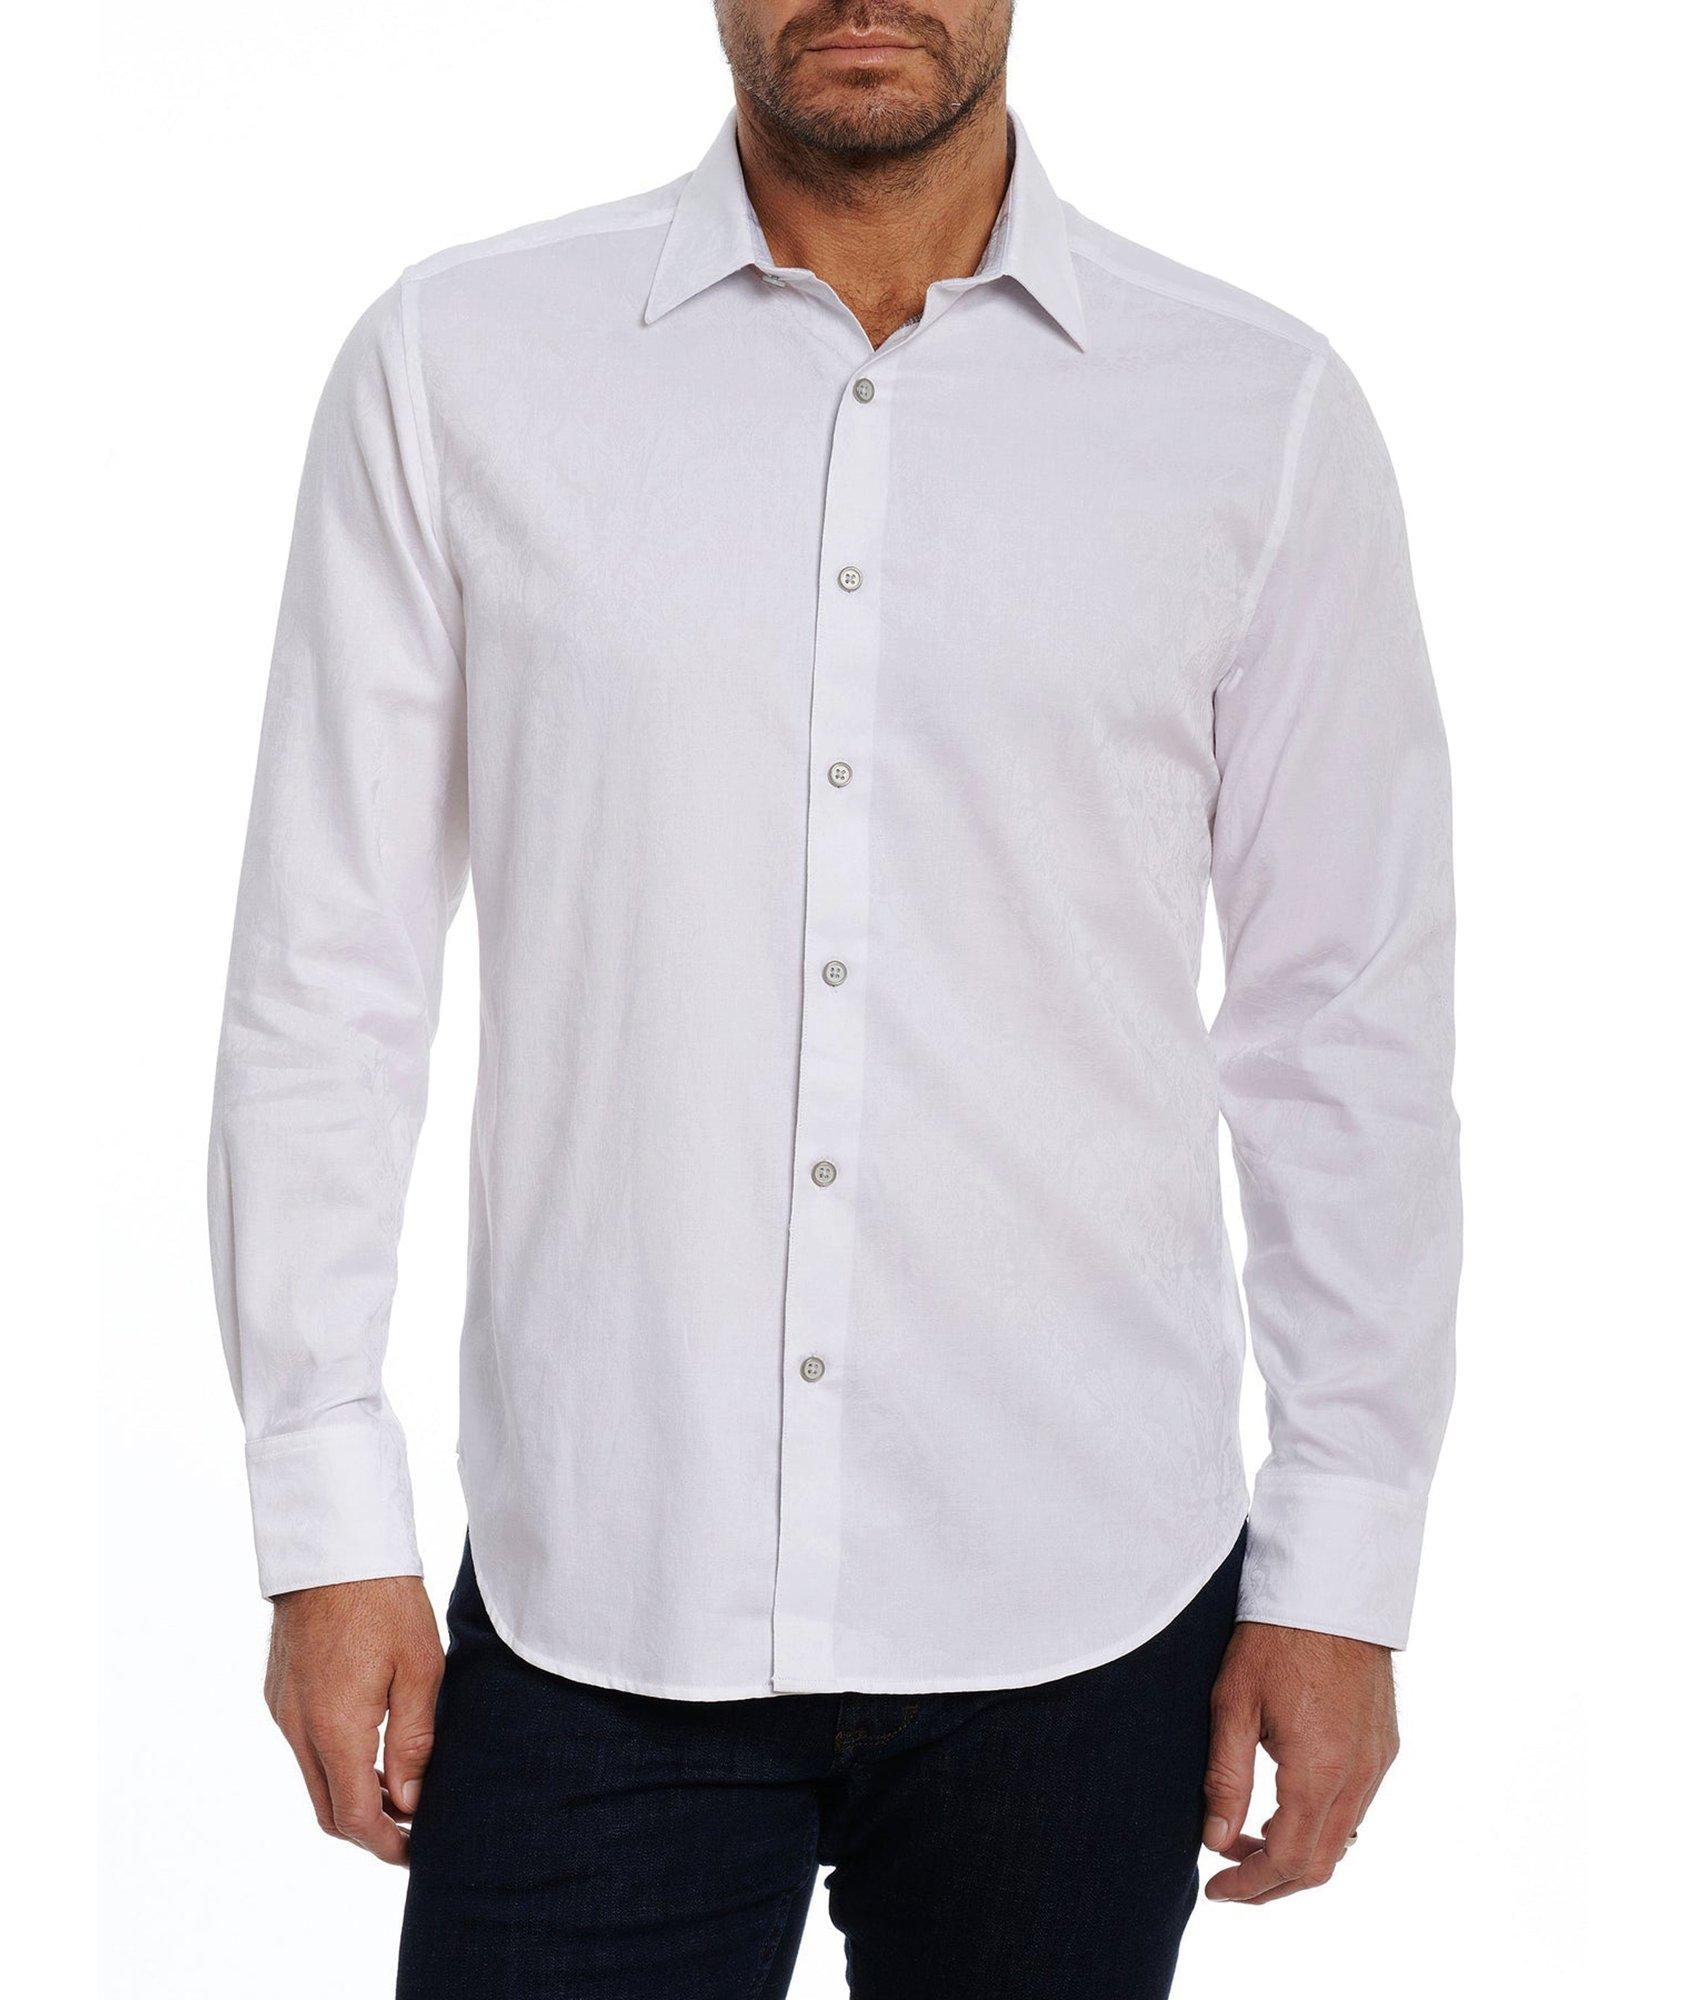 Highland Long Sleeve Classic Fit Shirt image 0